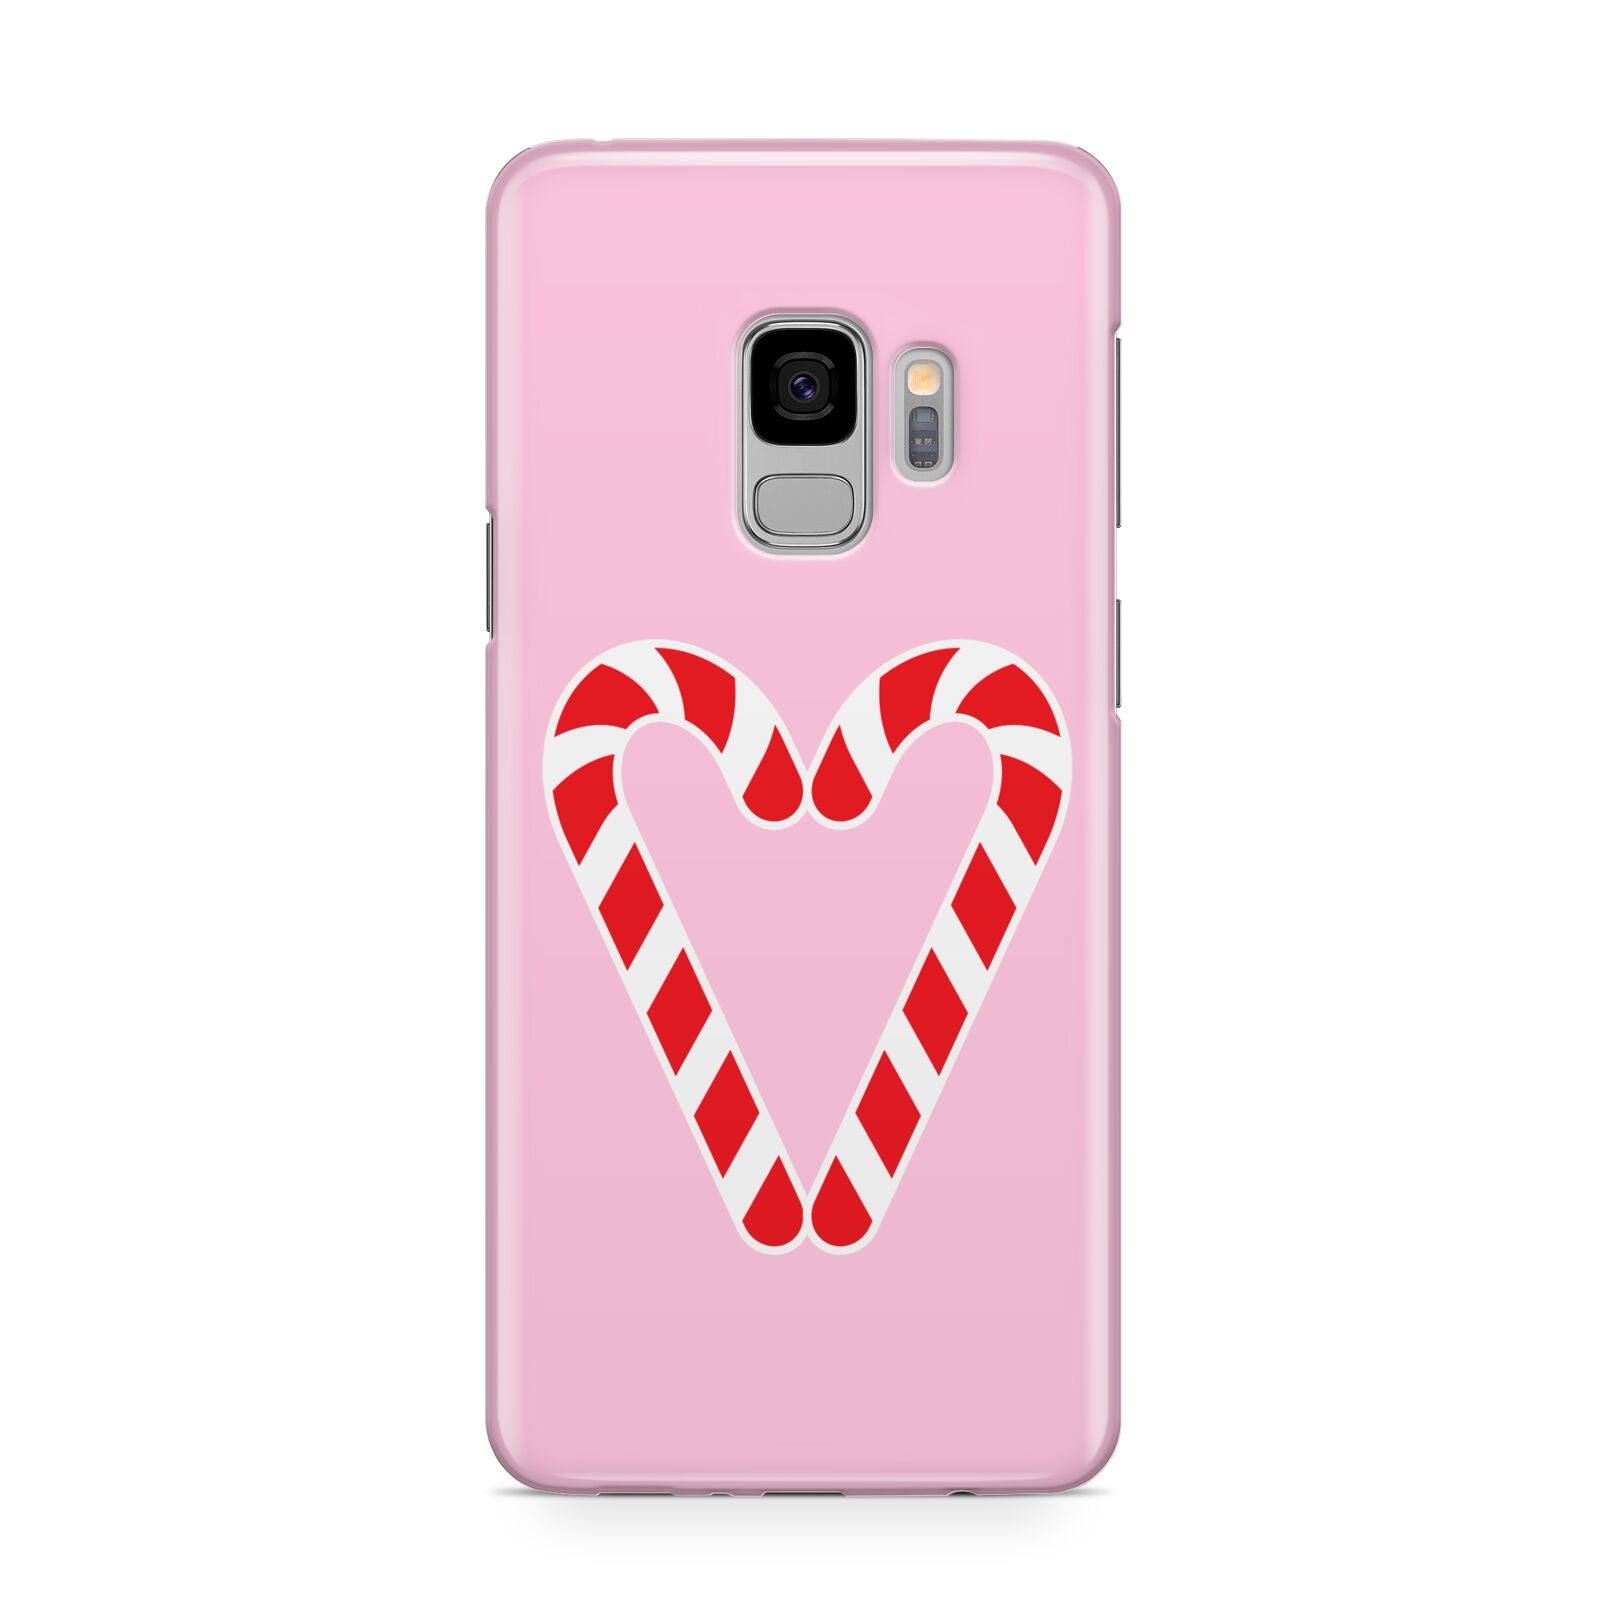 Candy Cane Heart Samsung Galaxy S9 Case